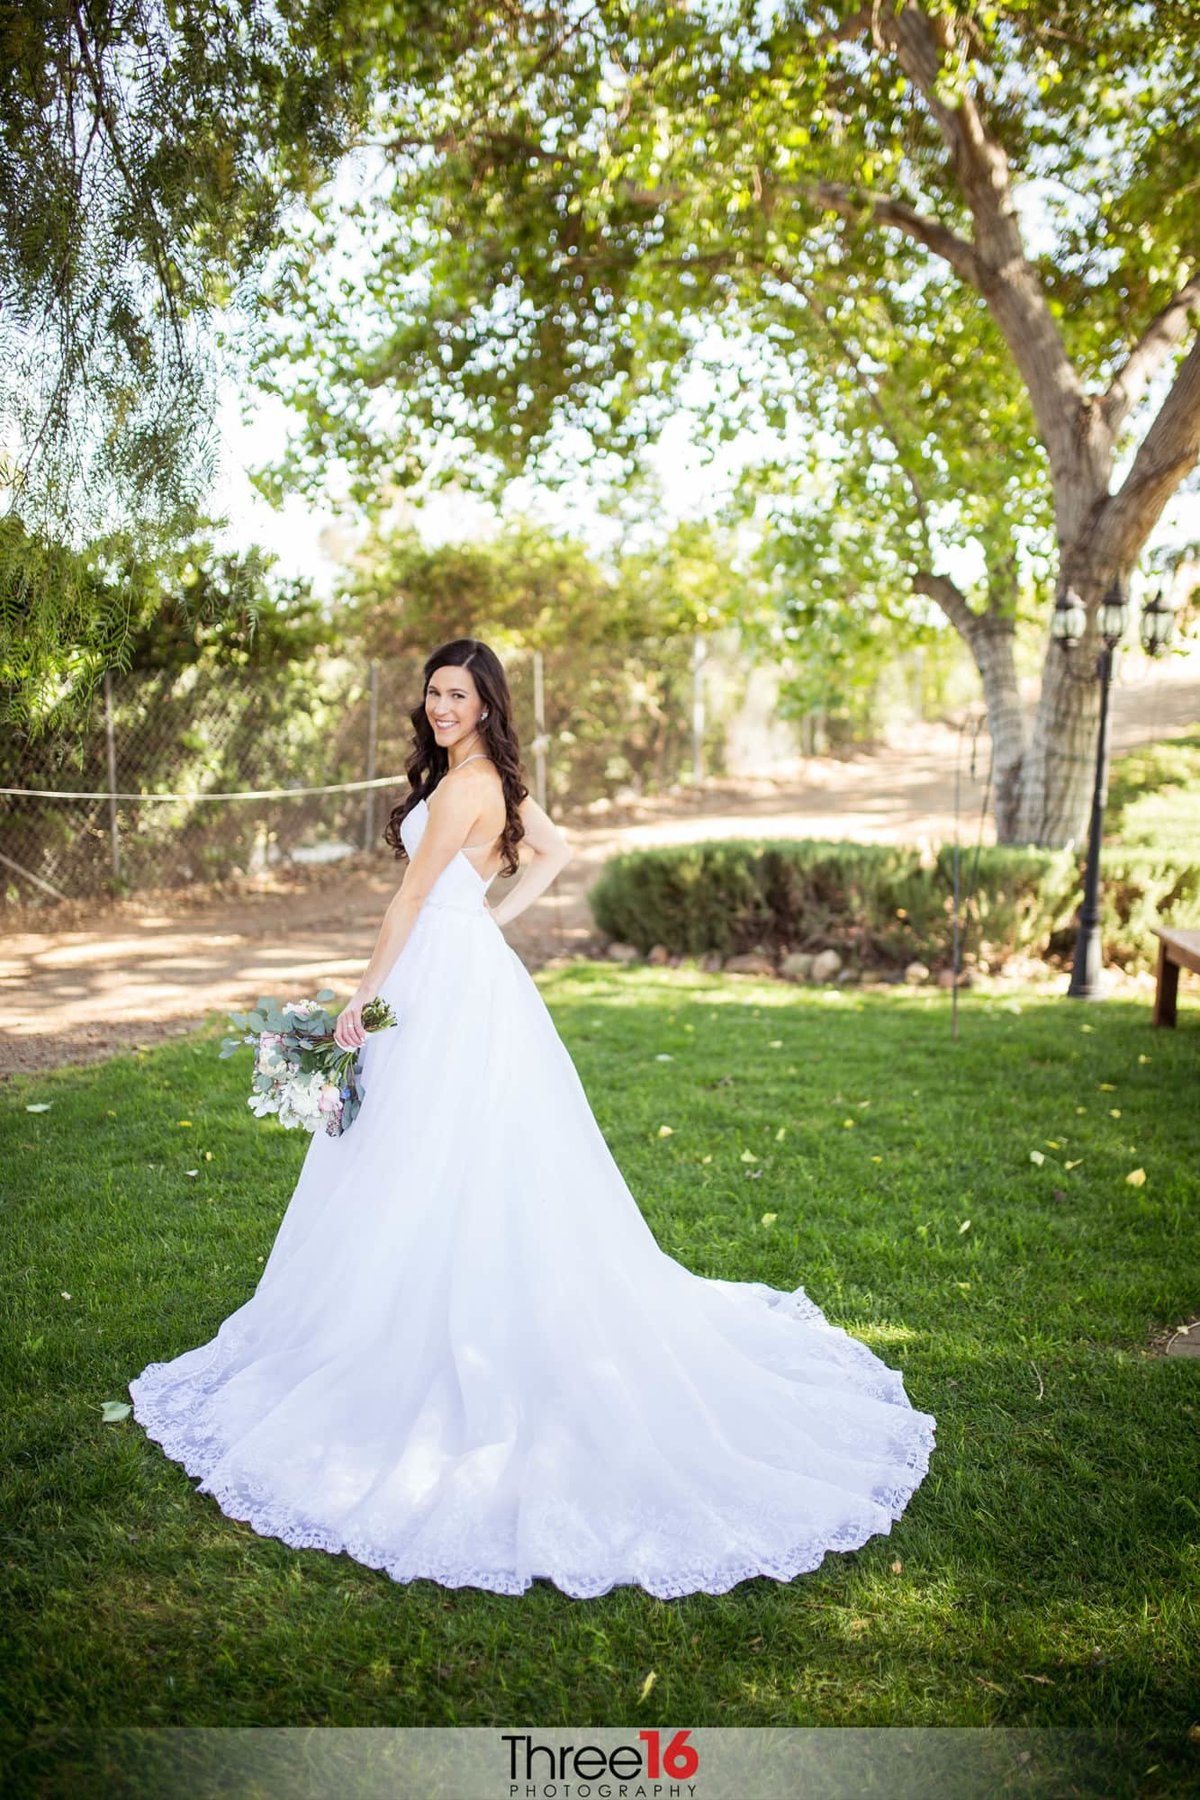 Beautiful Bride posing in her amazing wedding gown